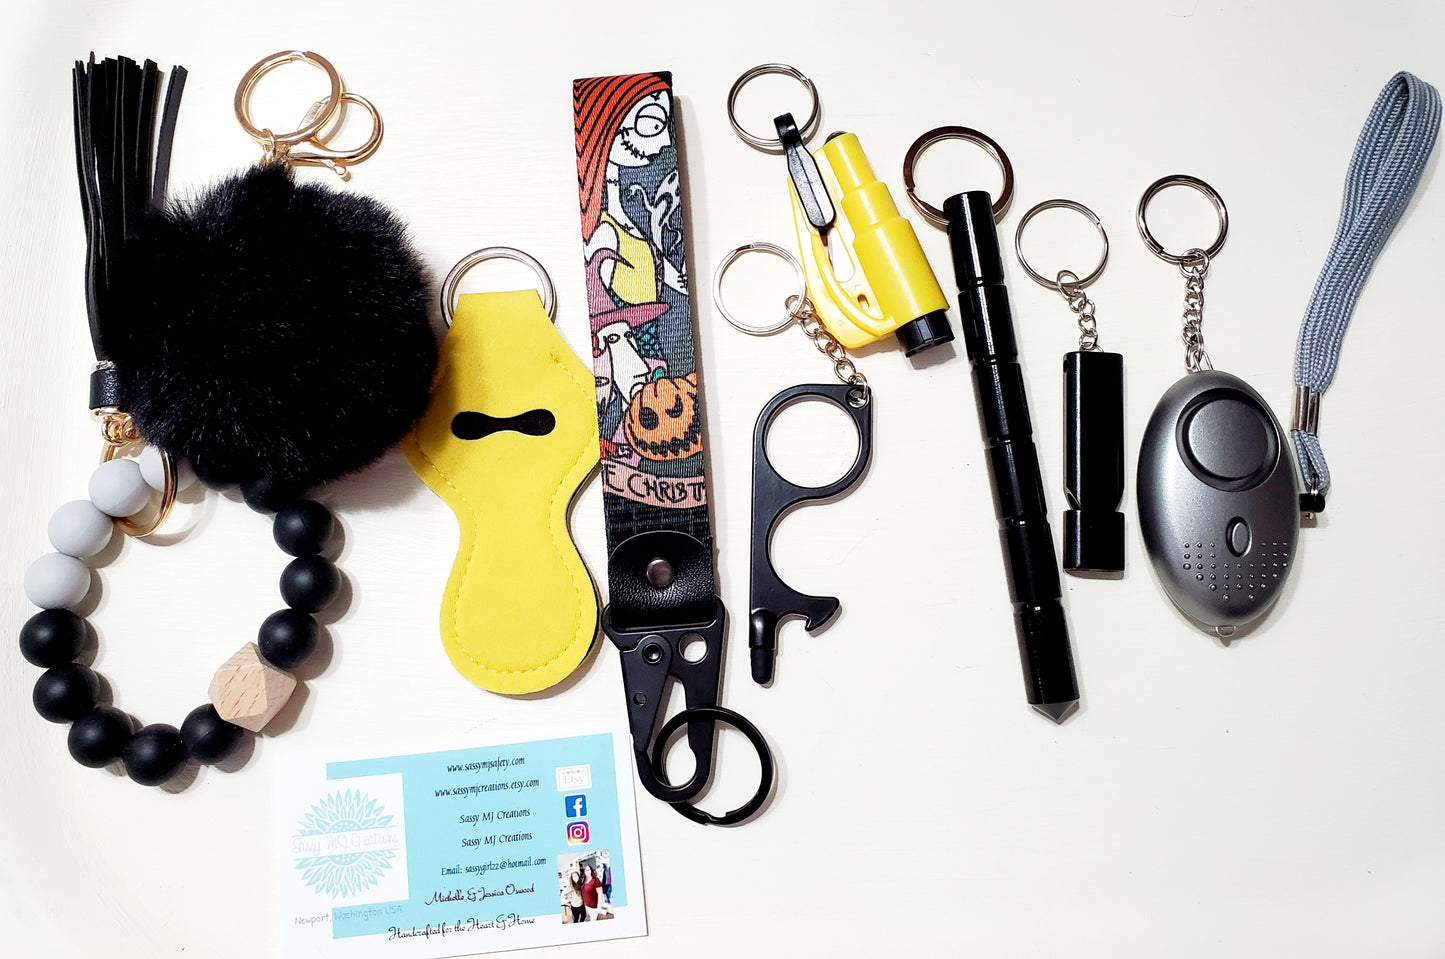 Black & Yellow, Cartoon, Anime, Wrist Strap Safety Keychain - Personal Safety Kit 10 pc